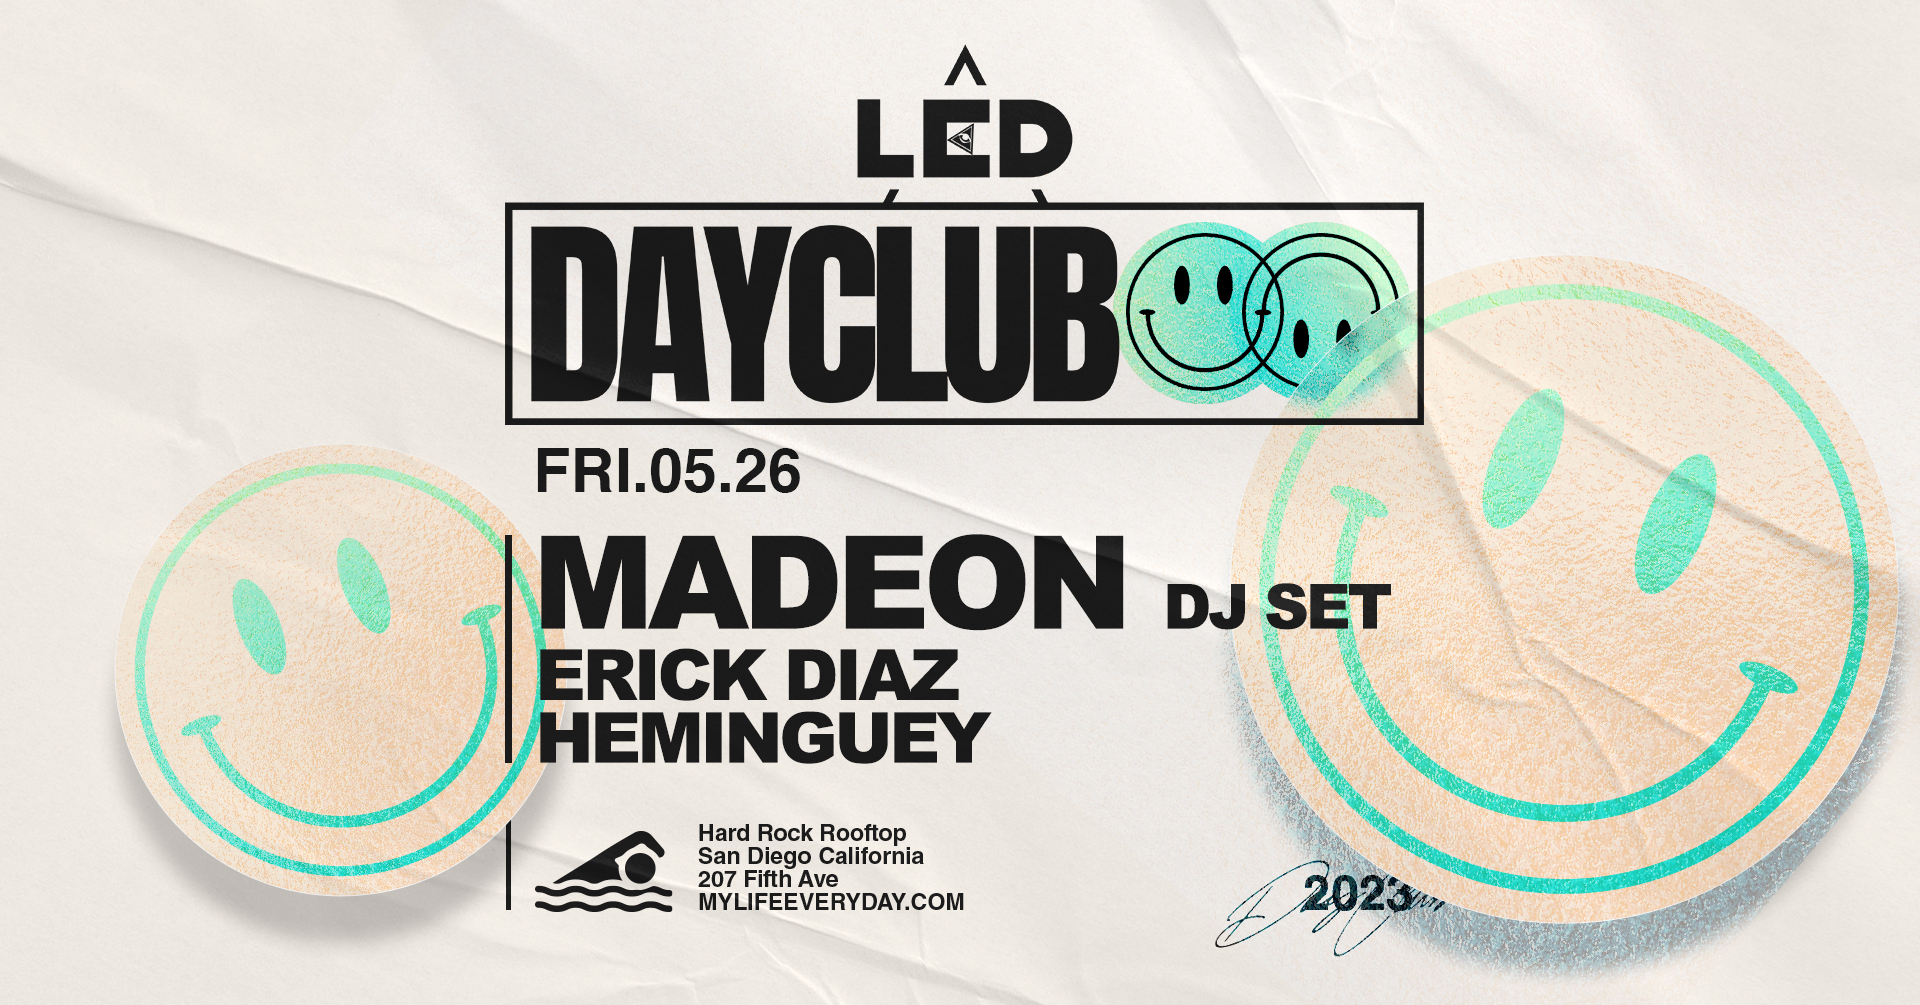 Madeon (DJ Set) + Heminguey + Erick Diaz